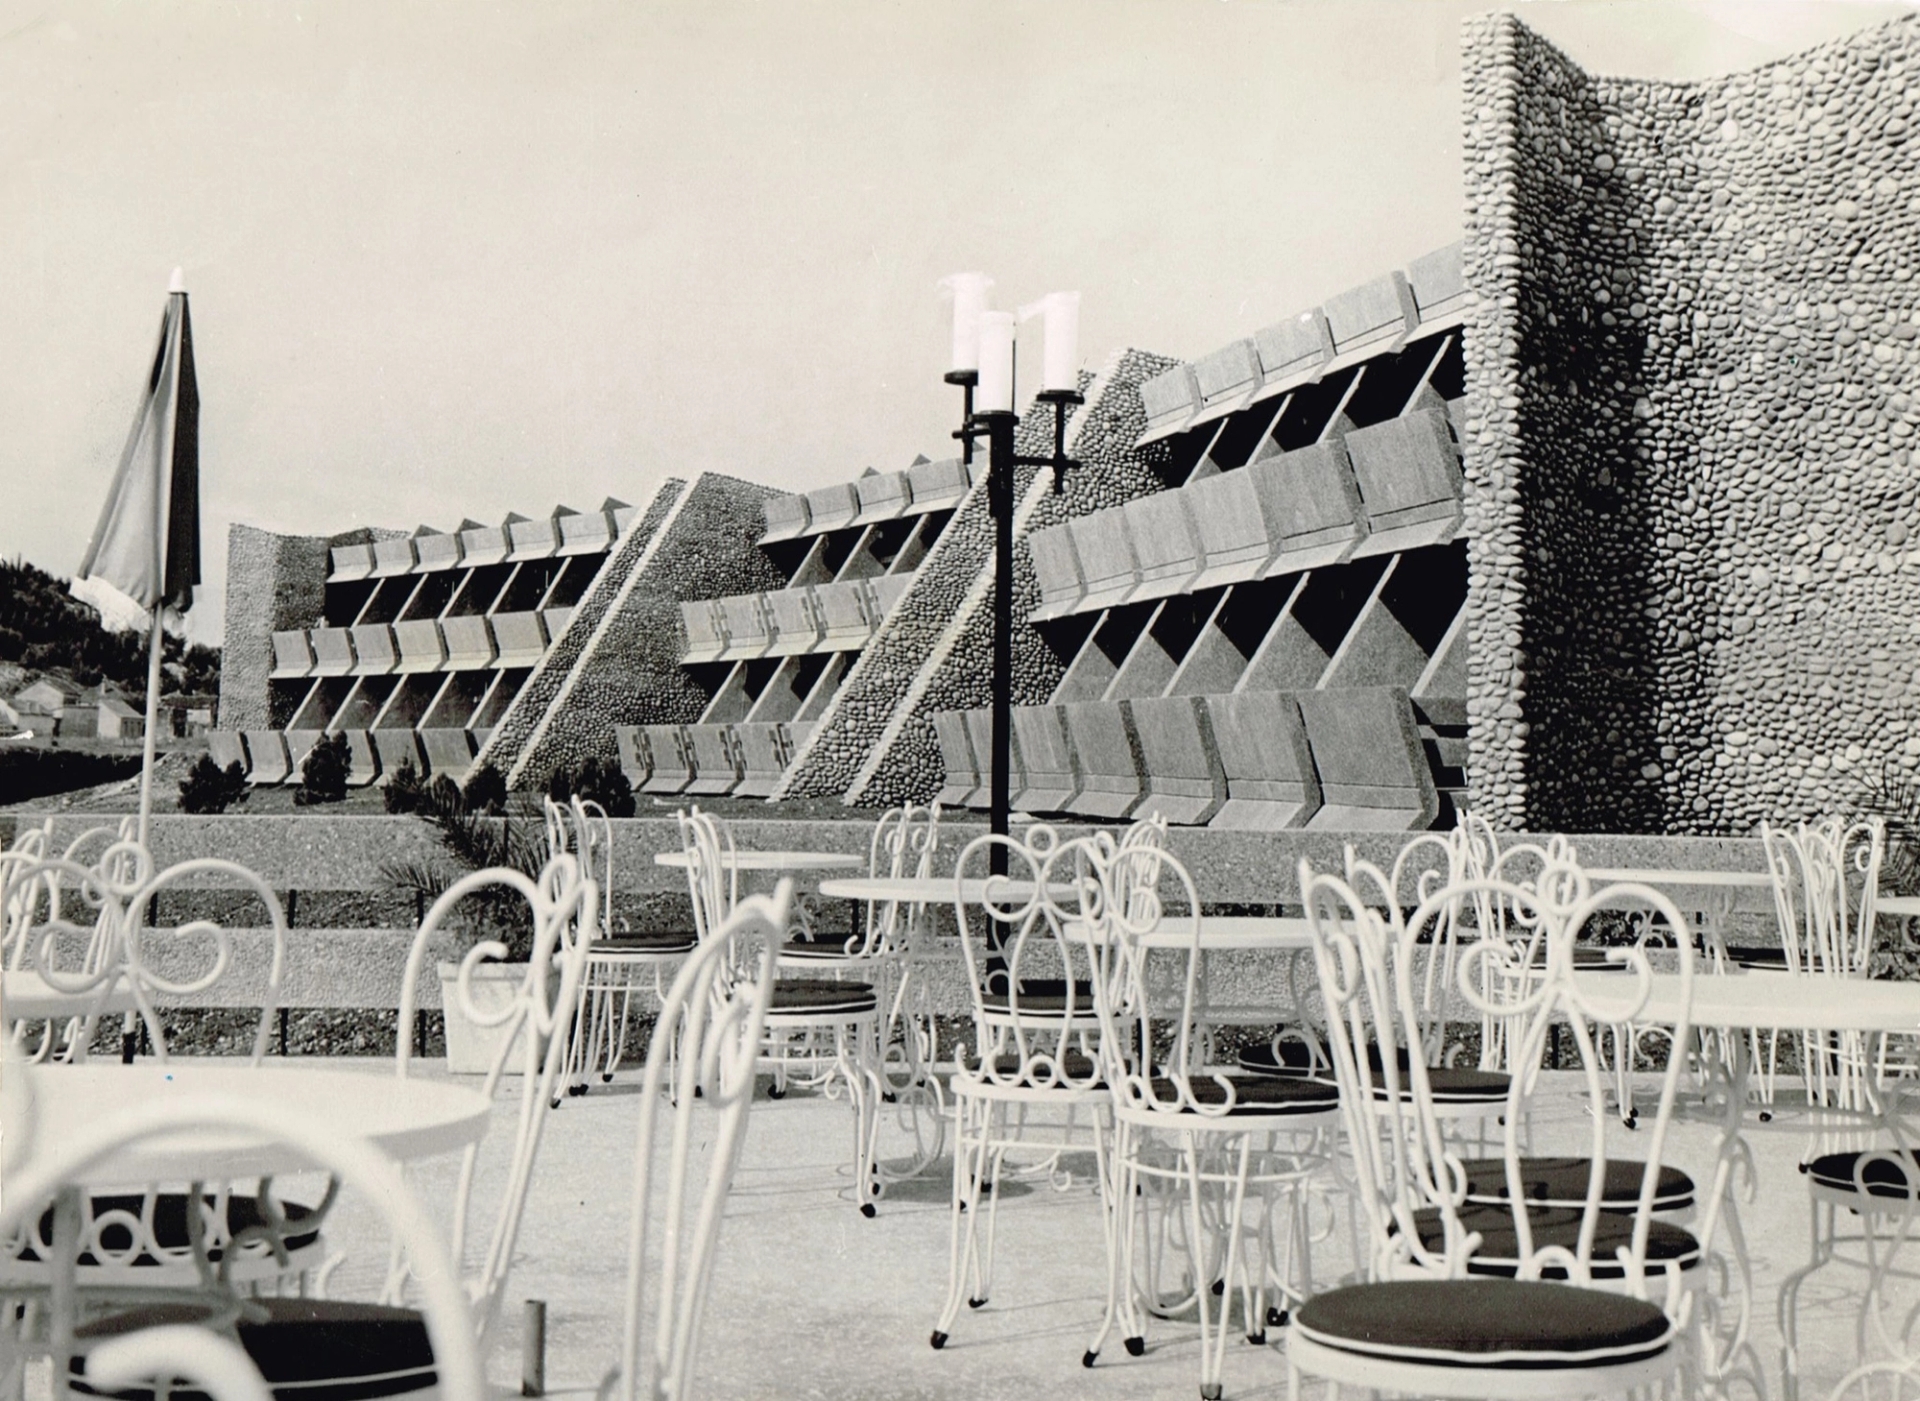 Hotel Podgorica, Montenegro, 1967. 

Courtesy of the Pobjeda newspaper archive